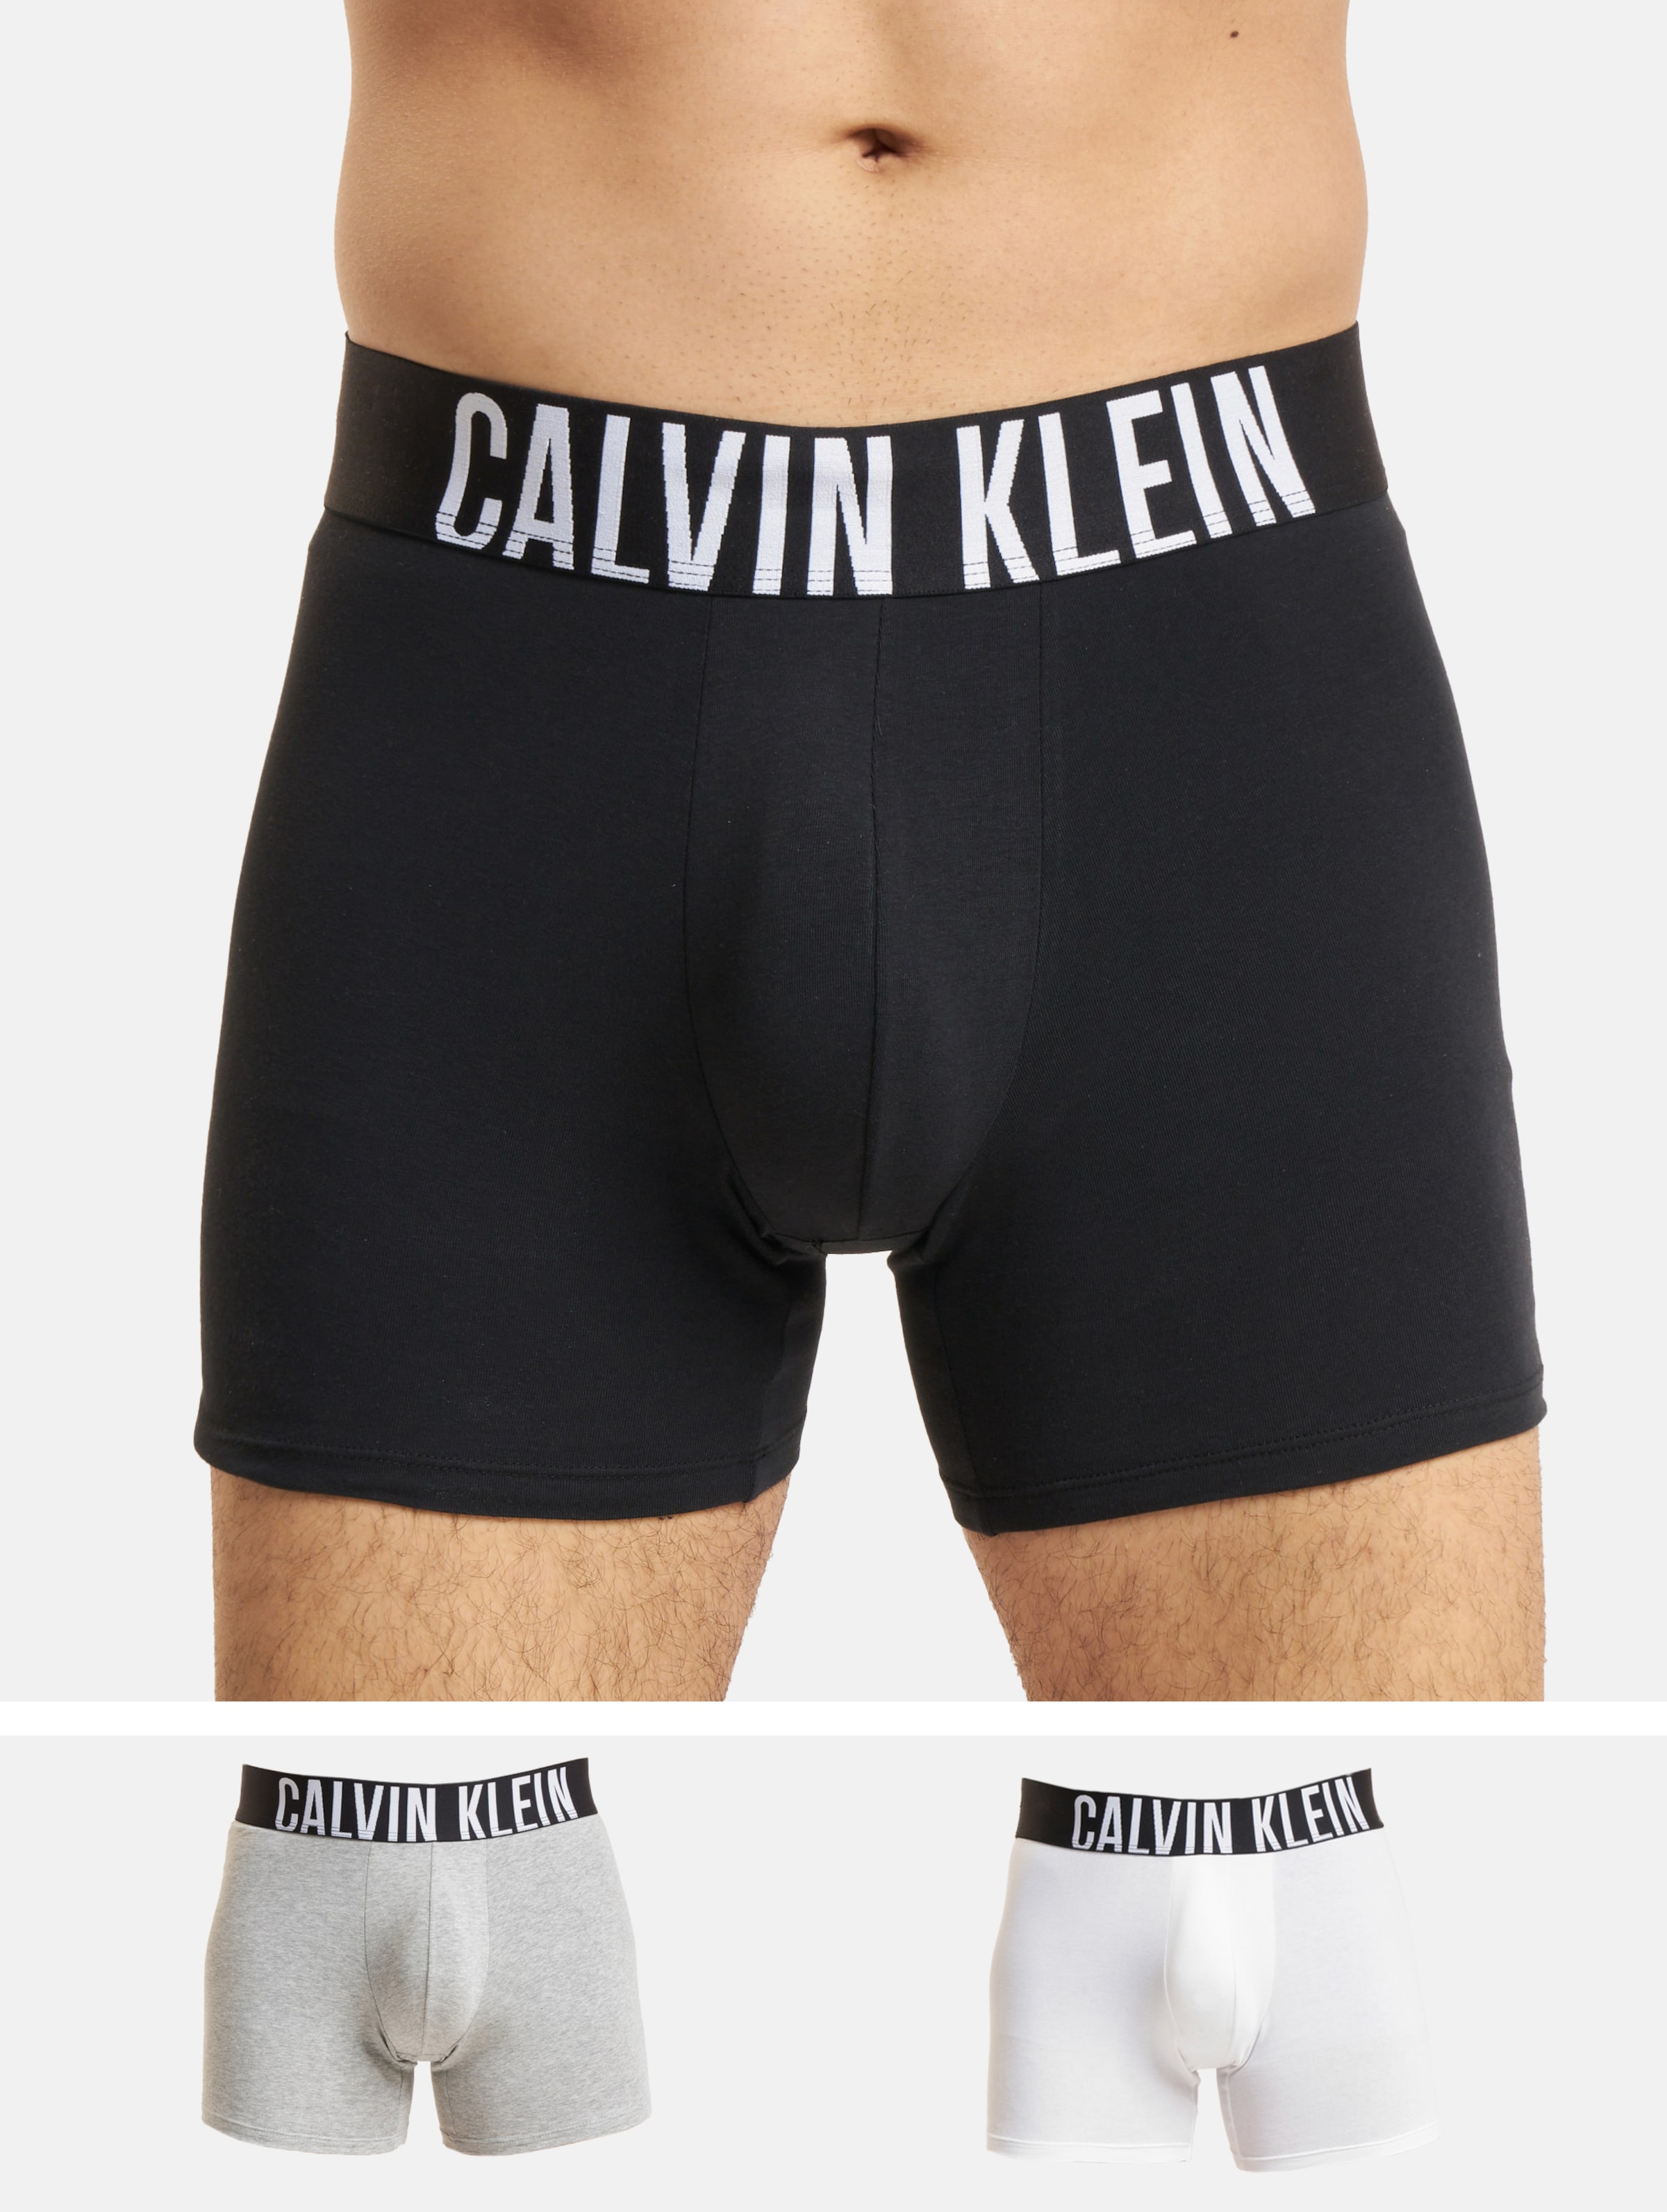 Calvin Klein Brief 3 Pack Boxershorts Männer,Unisex op kleur grijs, Maat L